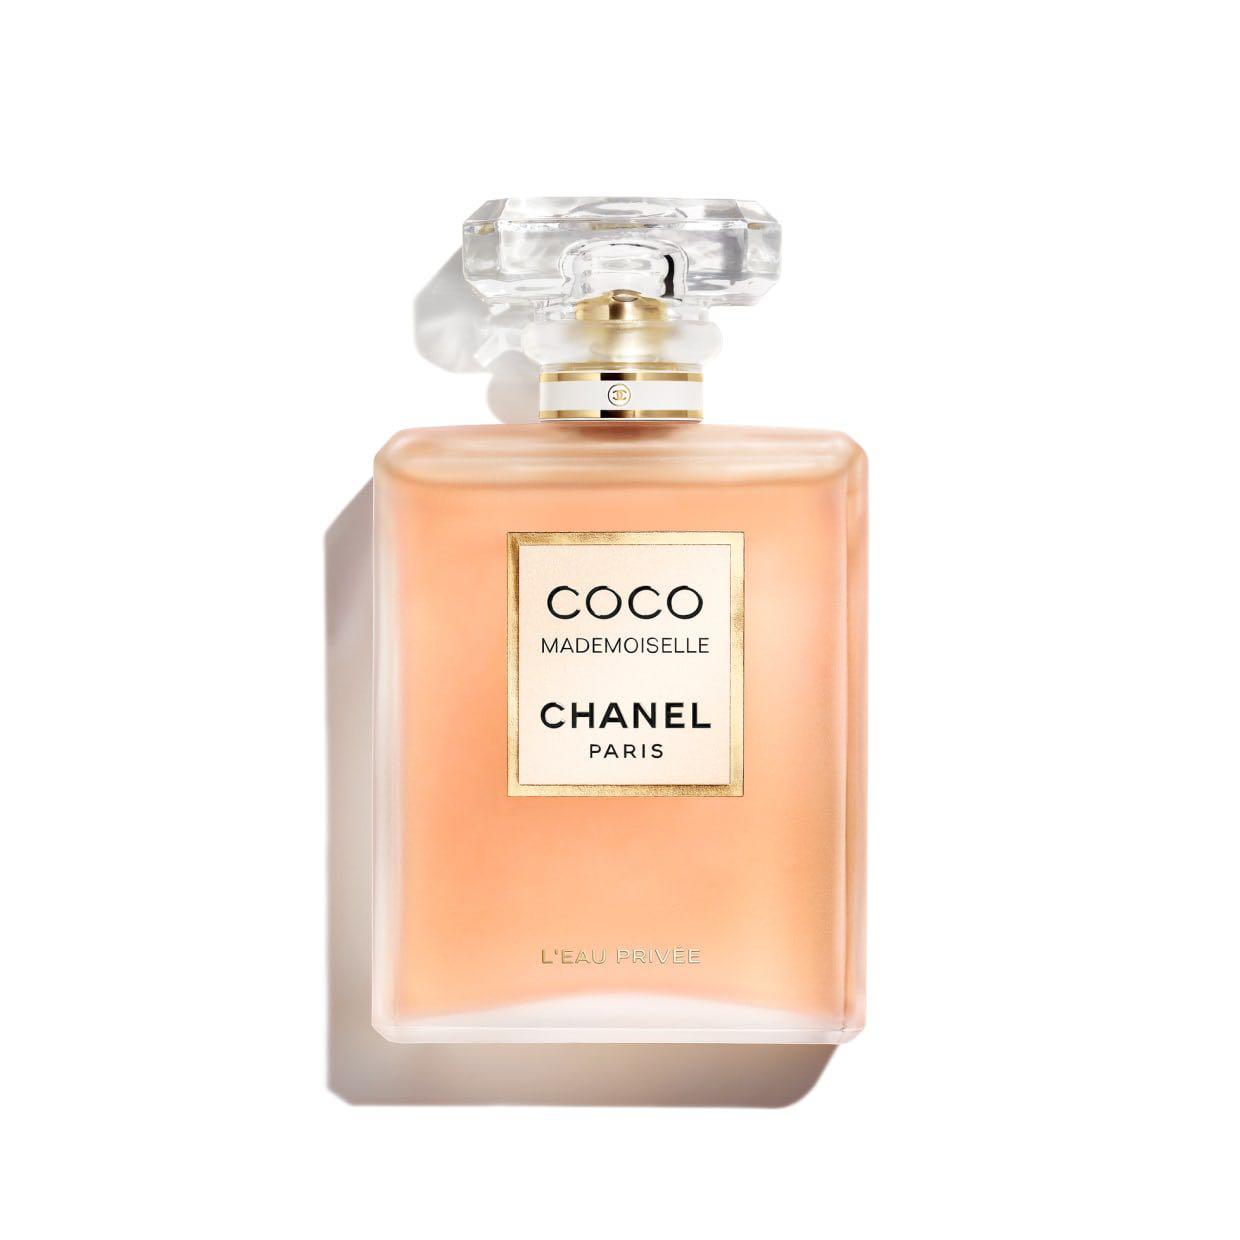 🌹CHANEL COCO MADEMOISELLE L'Eau Privée Night Fragrance 100ml